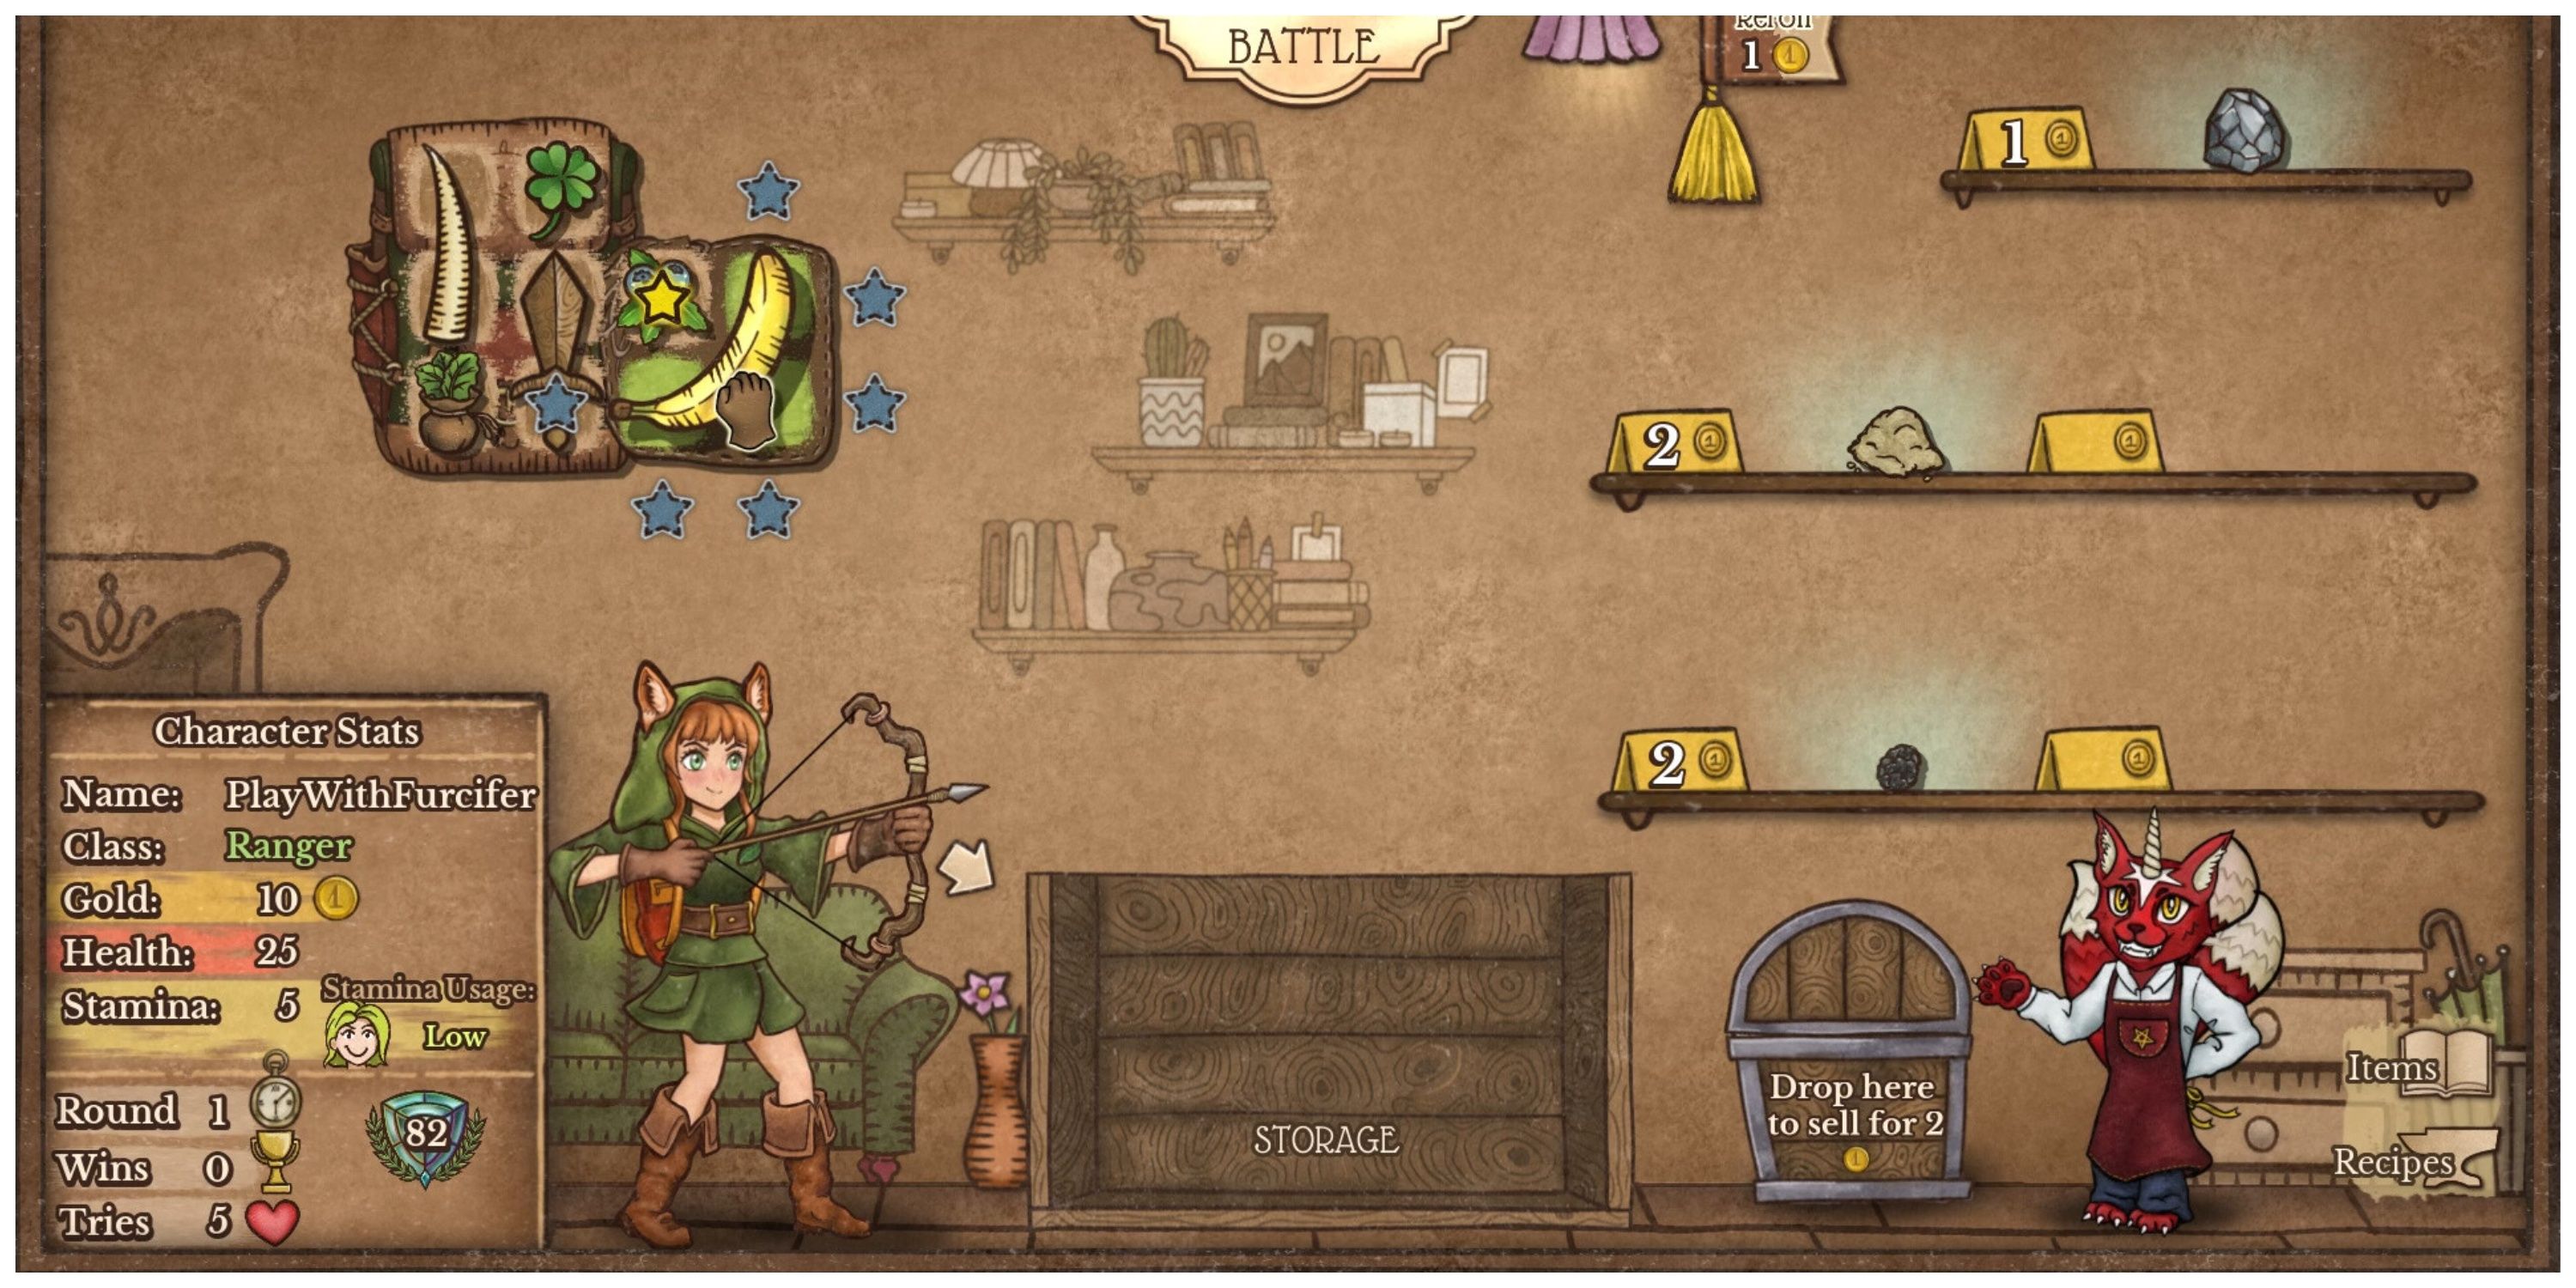 Backpack Battles - Steam Store Page Screenshot